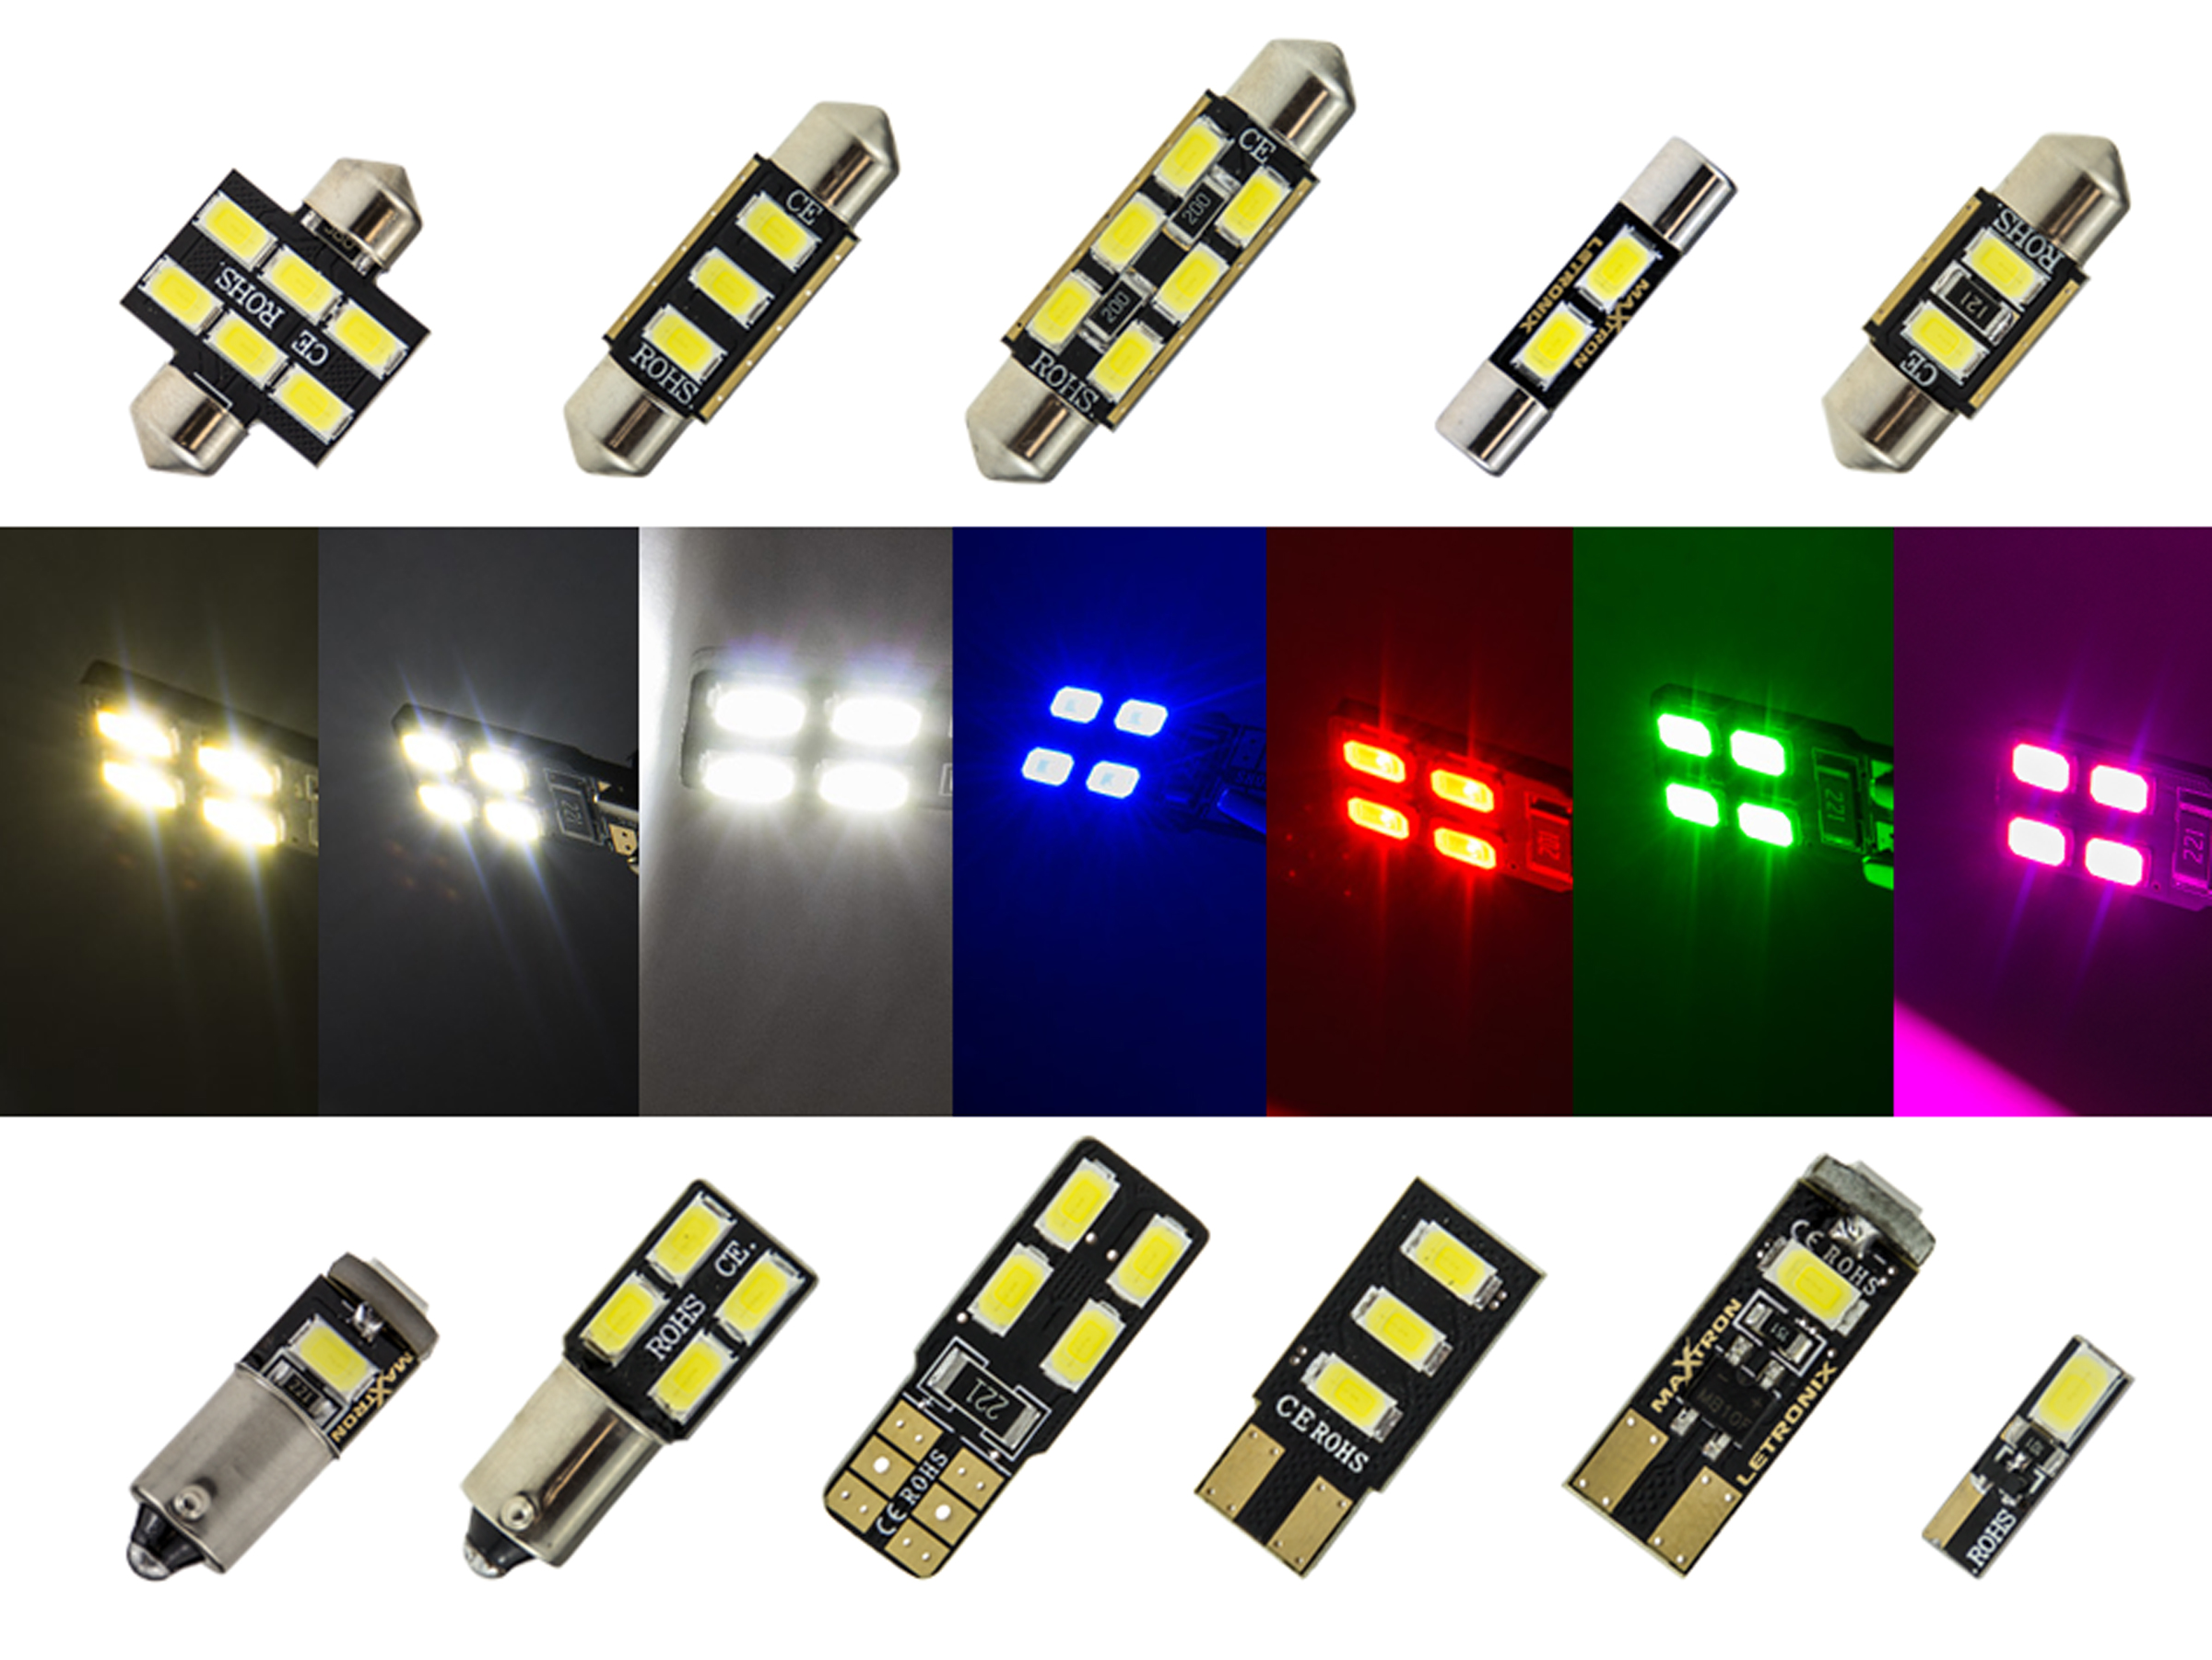 2er Set OEM LED Module für Umfeldbeleuchtung, Aussenspiegel, VW, Golf 5,  Jetta, Passat, LED Umfeldbeleuchtung, LED Module, Auto Innenraumlicht, LED Auto Innenraumbeleuchtung